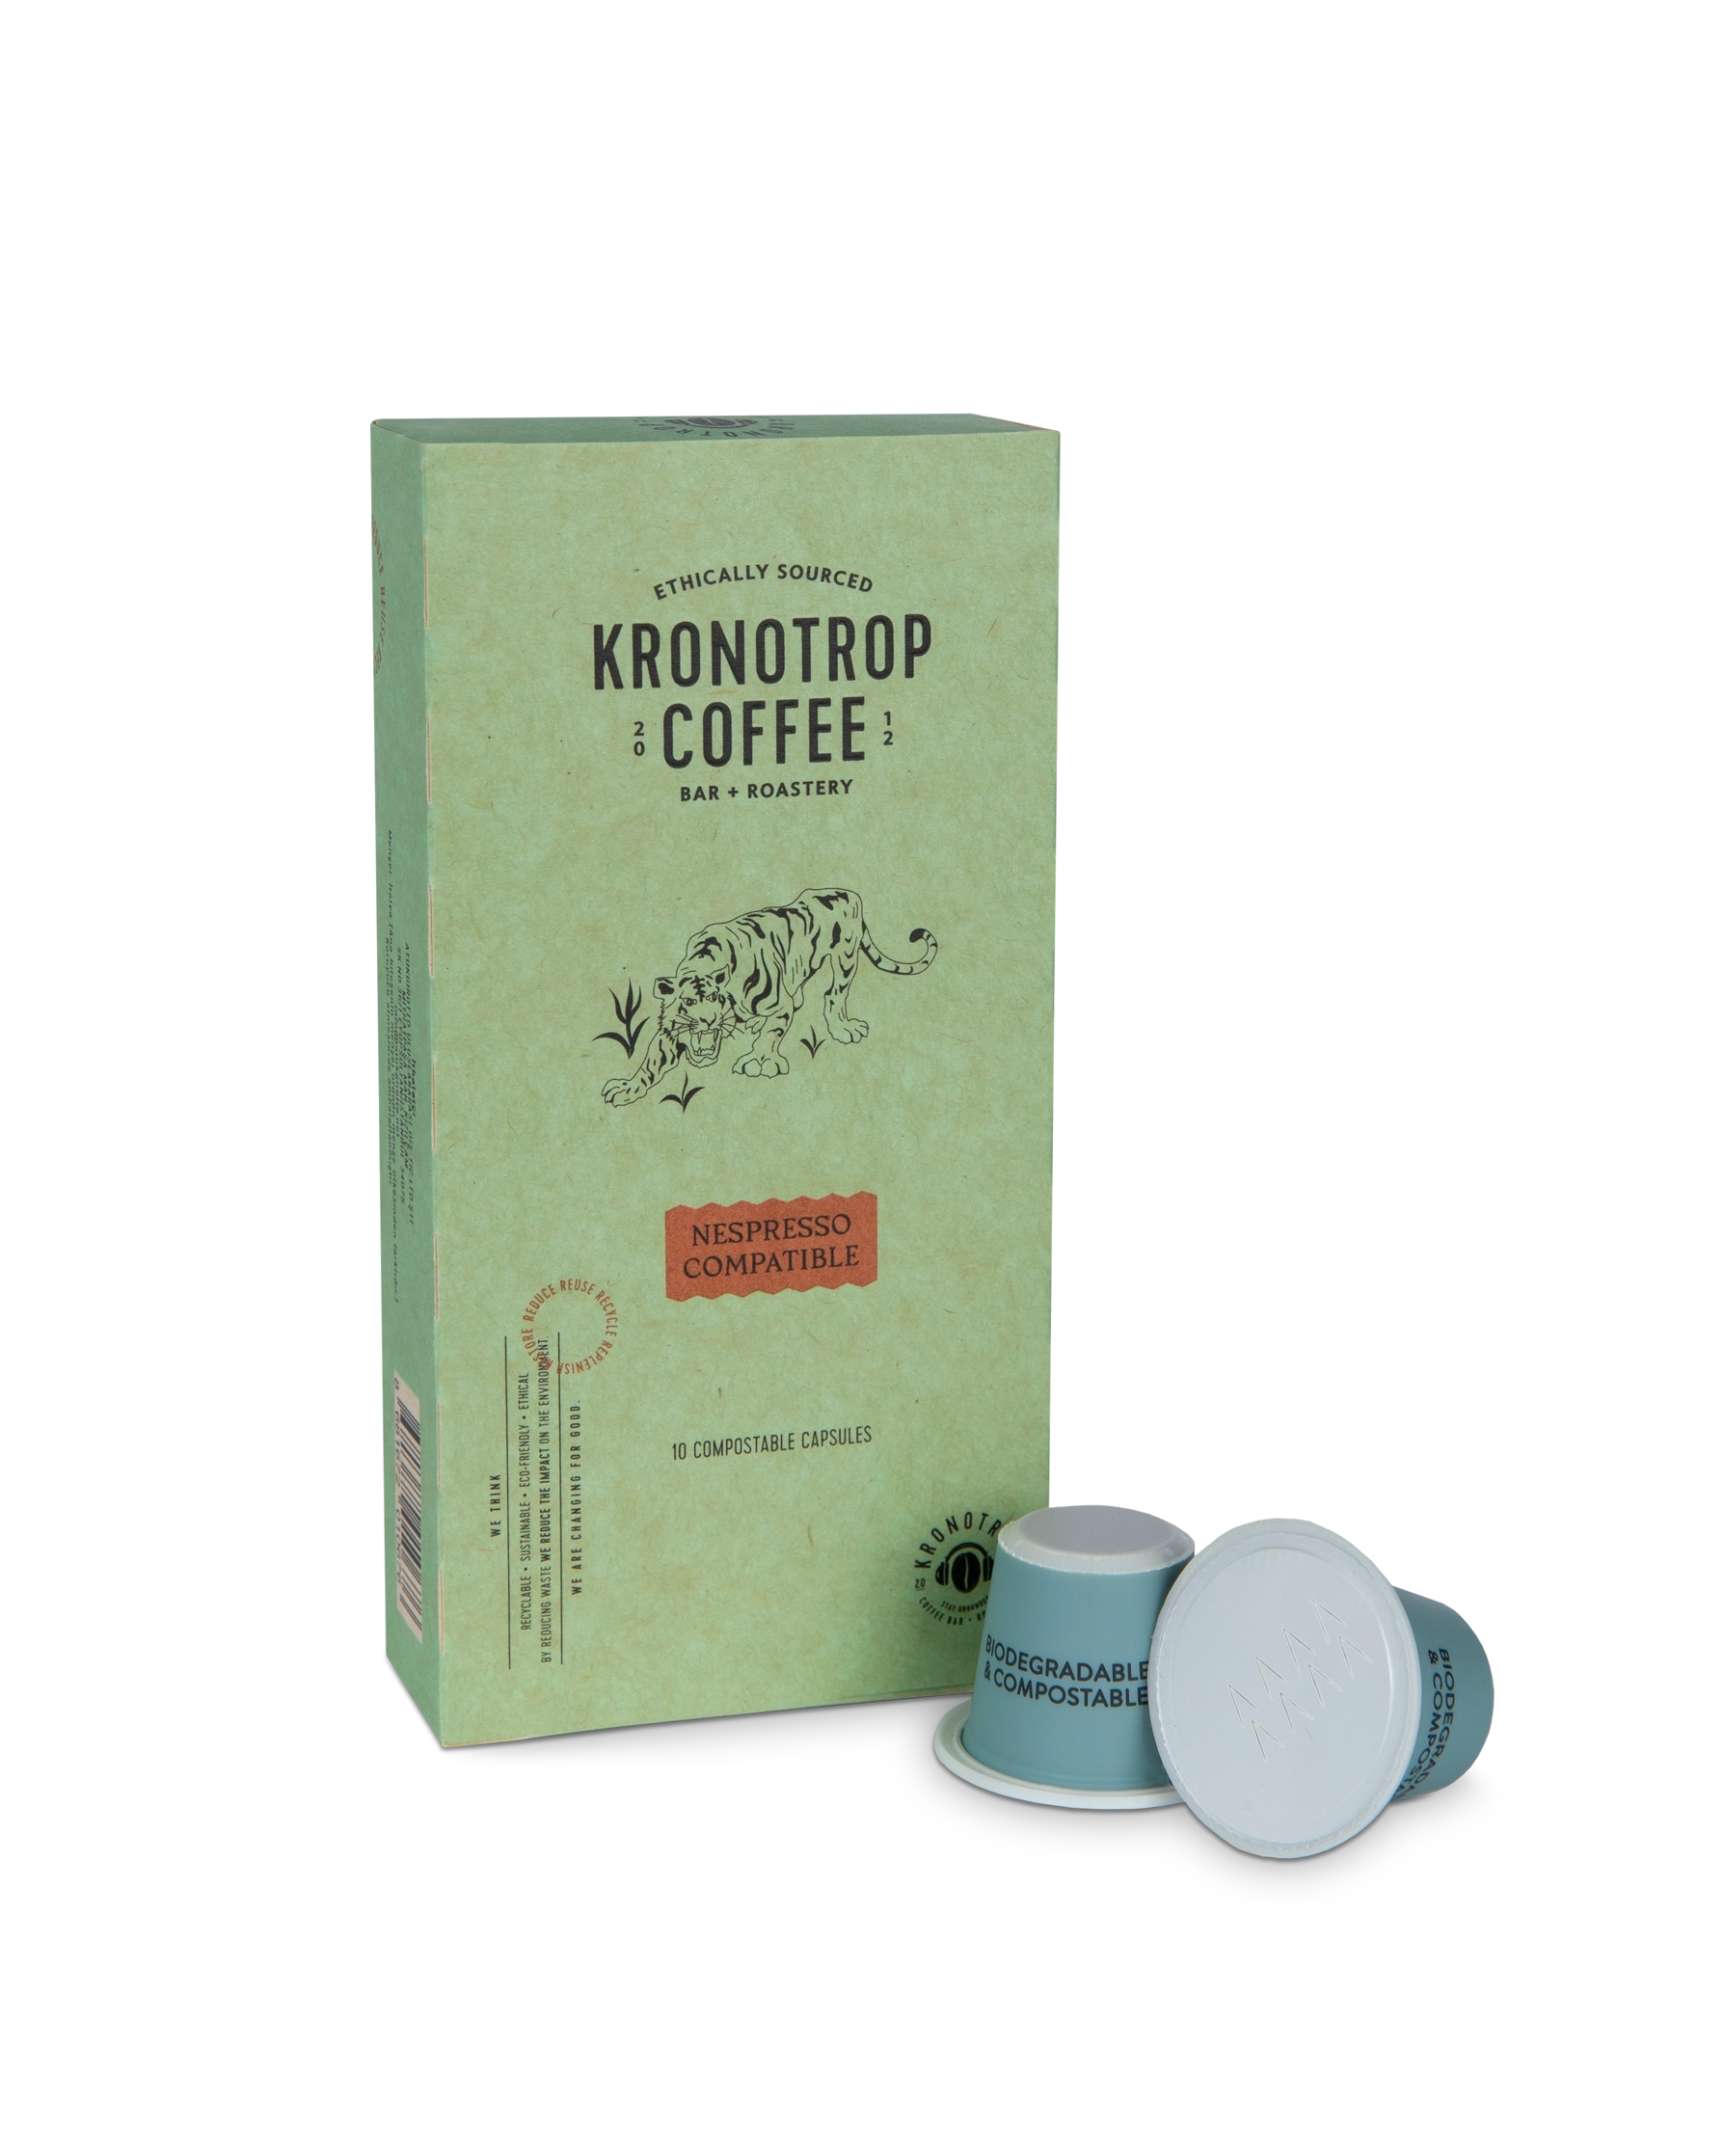 Kronotrop Espresso Capsule